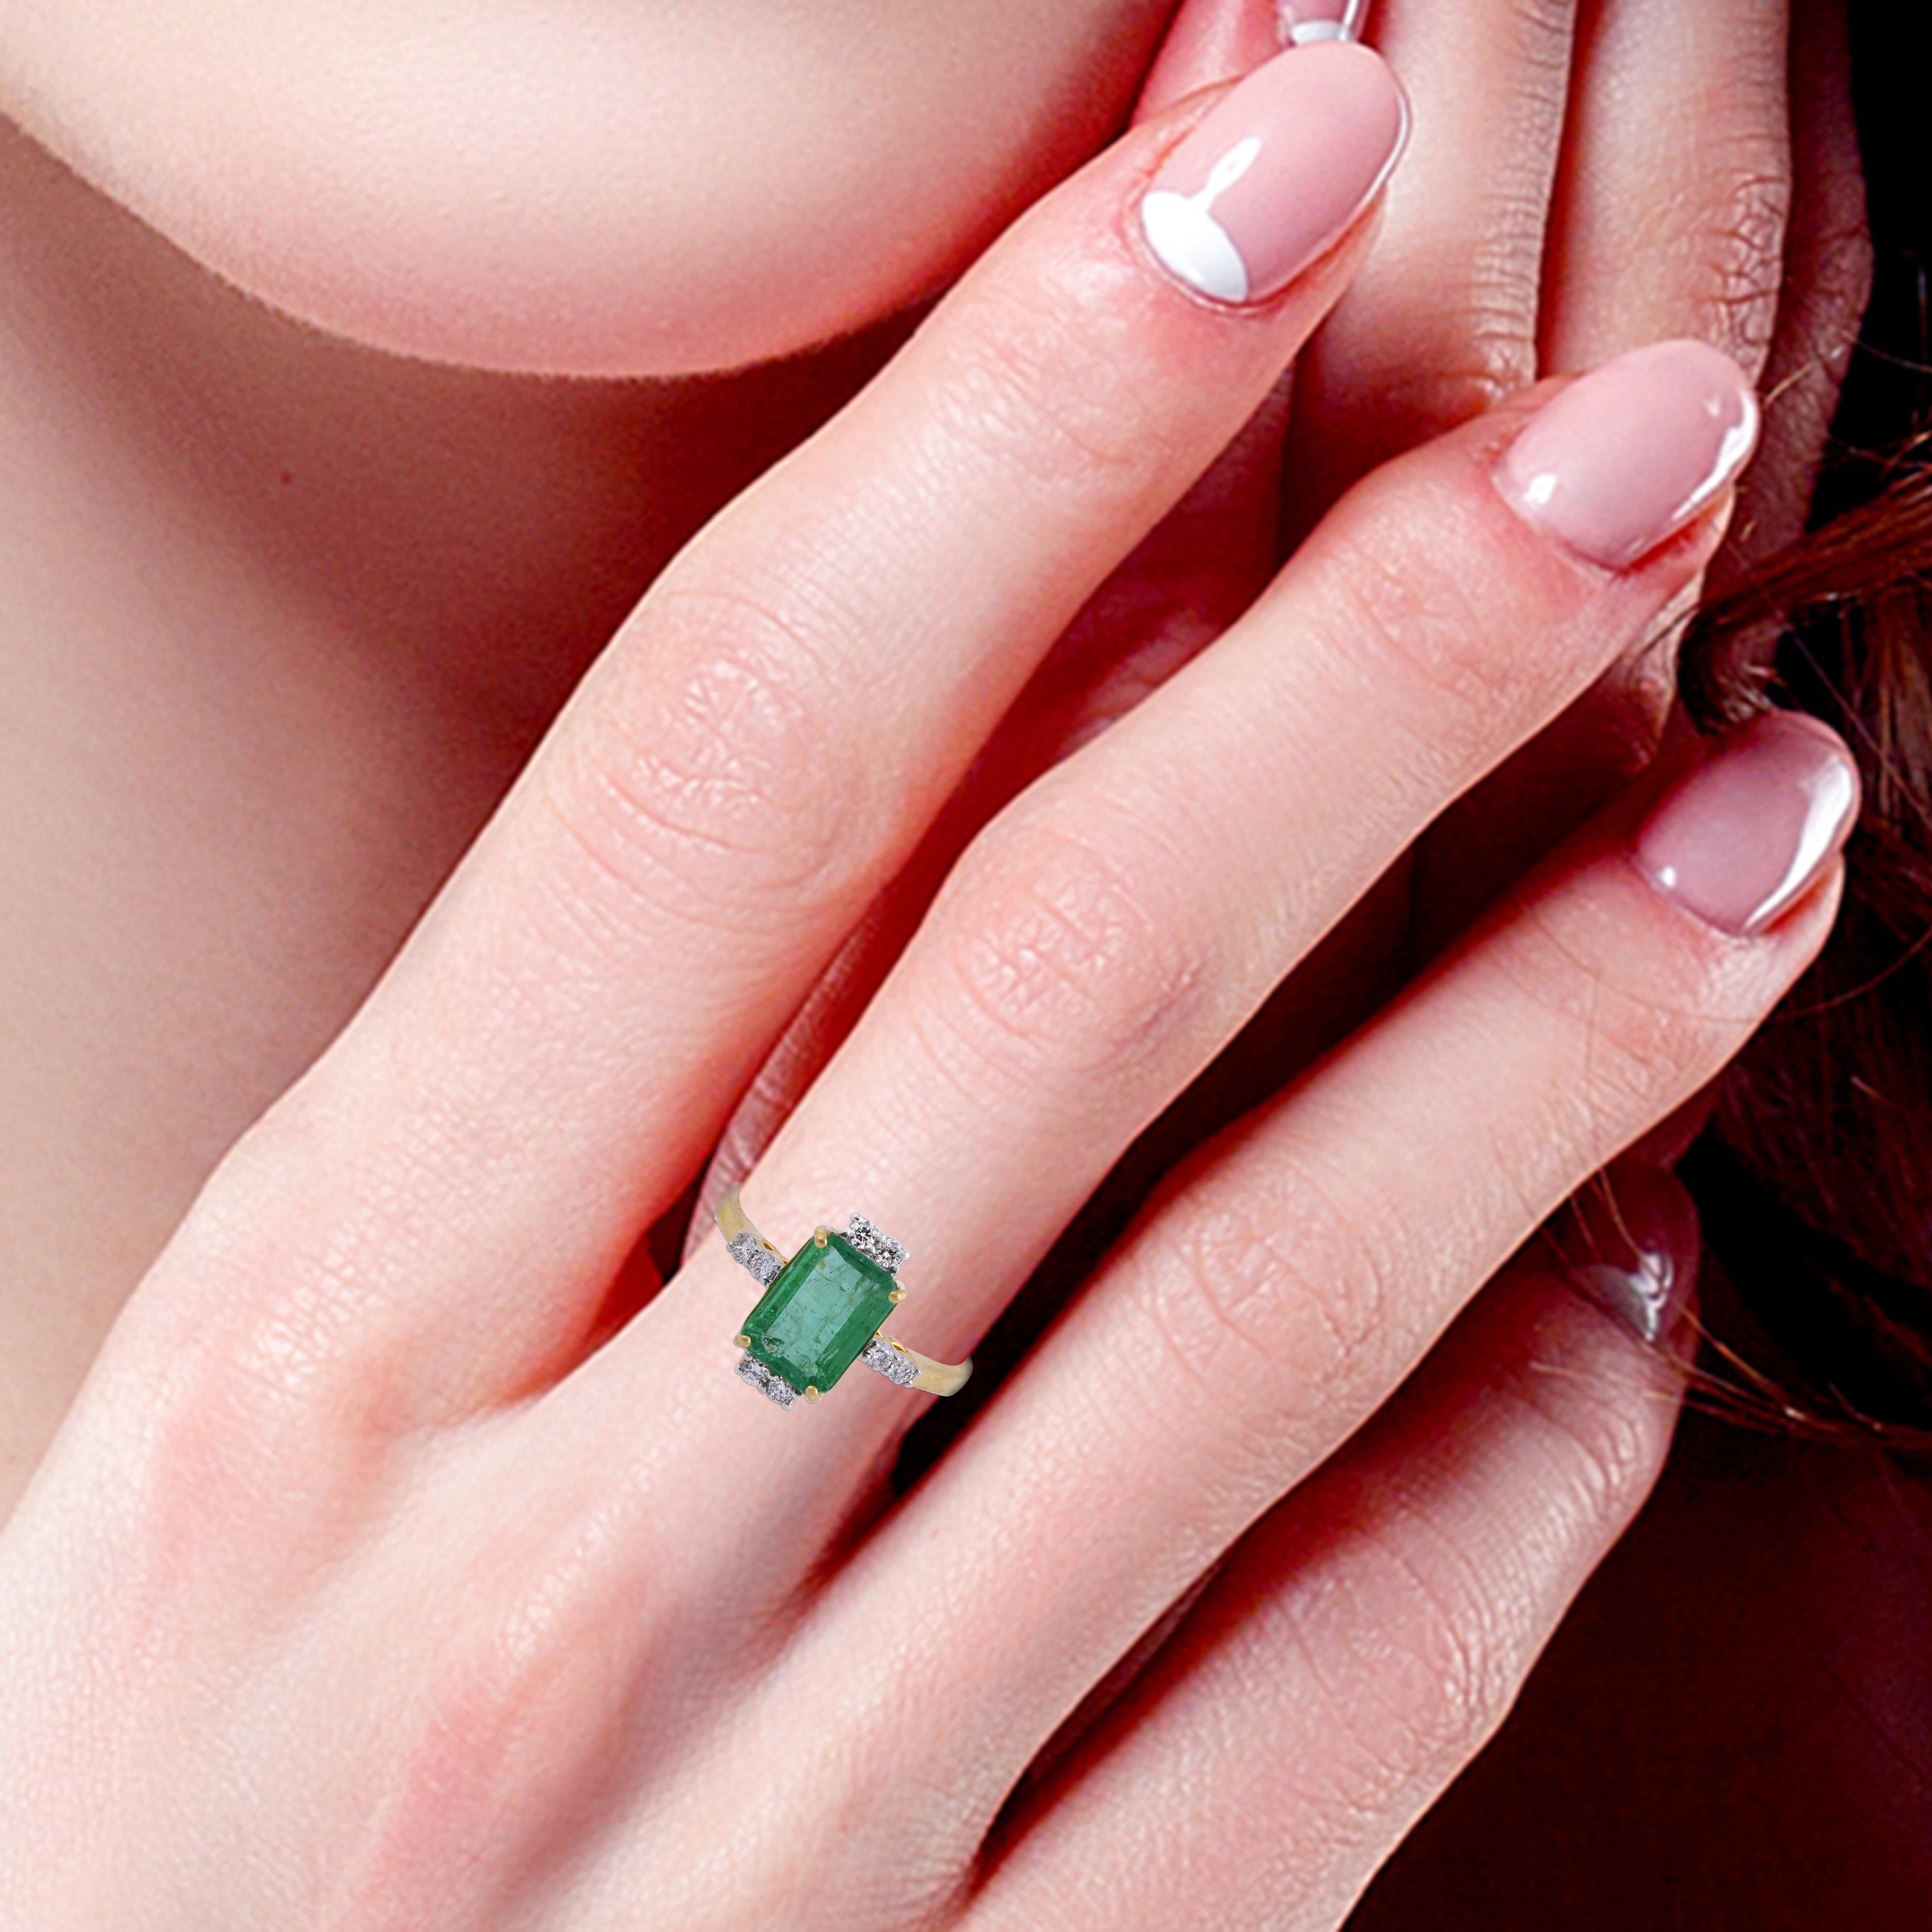 For Sale:  Natural Emerald Gemstone Wedding Ring Diamond 18k Yellow Gold Handmade Jewelry 3